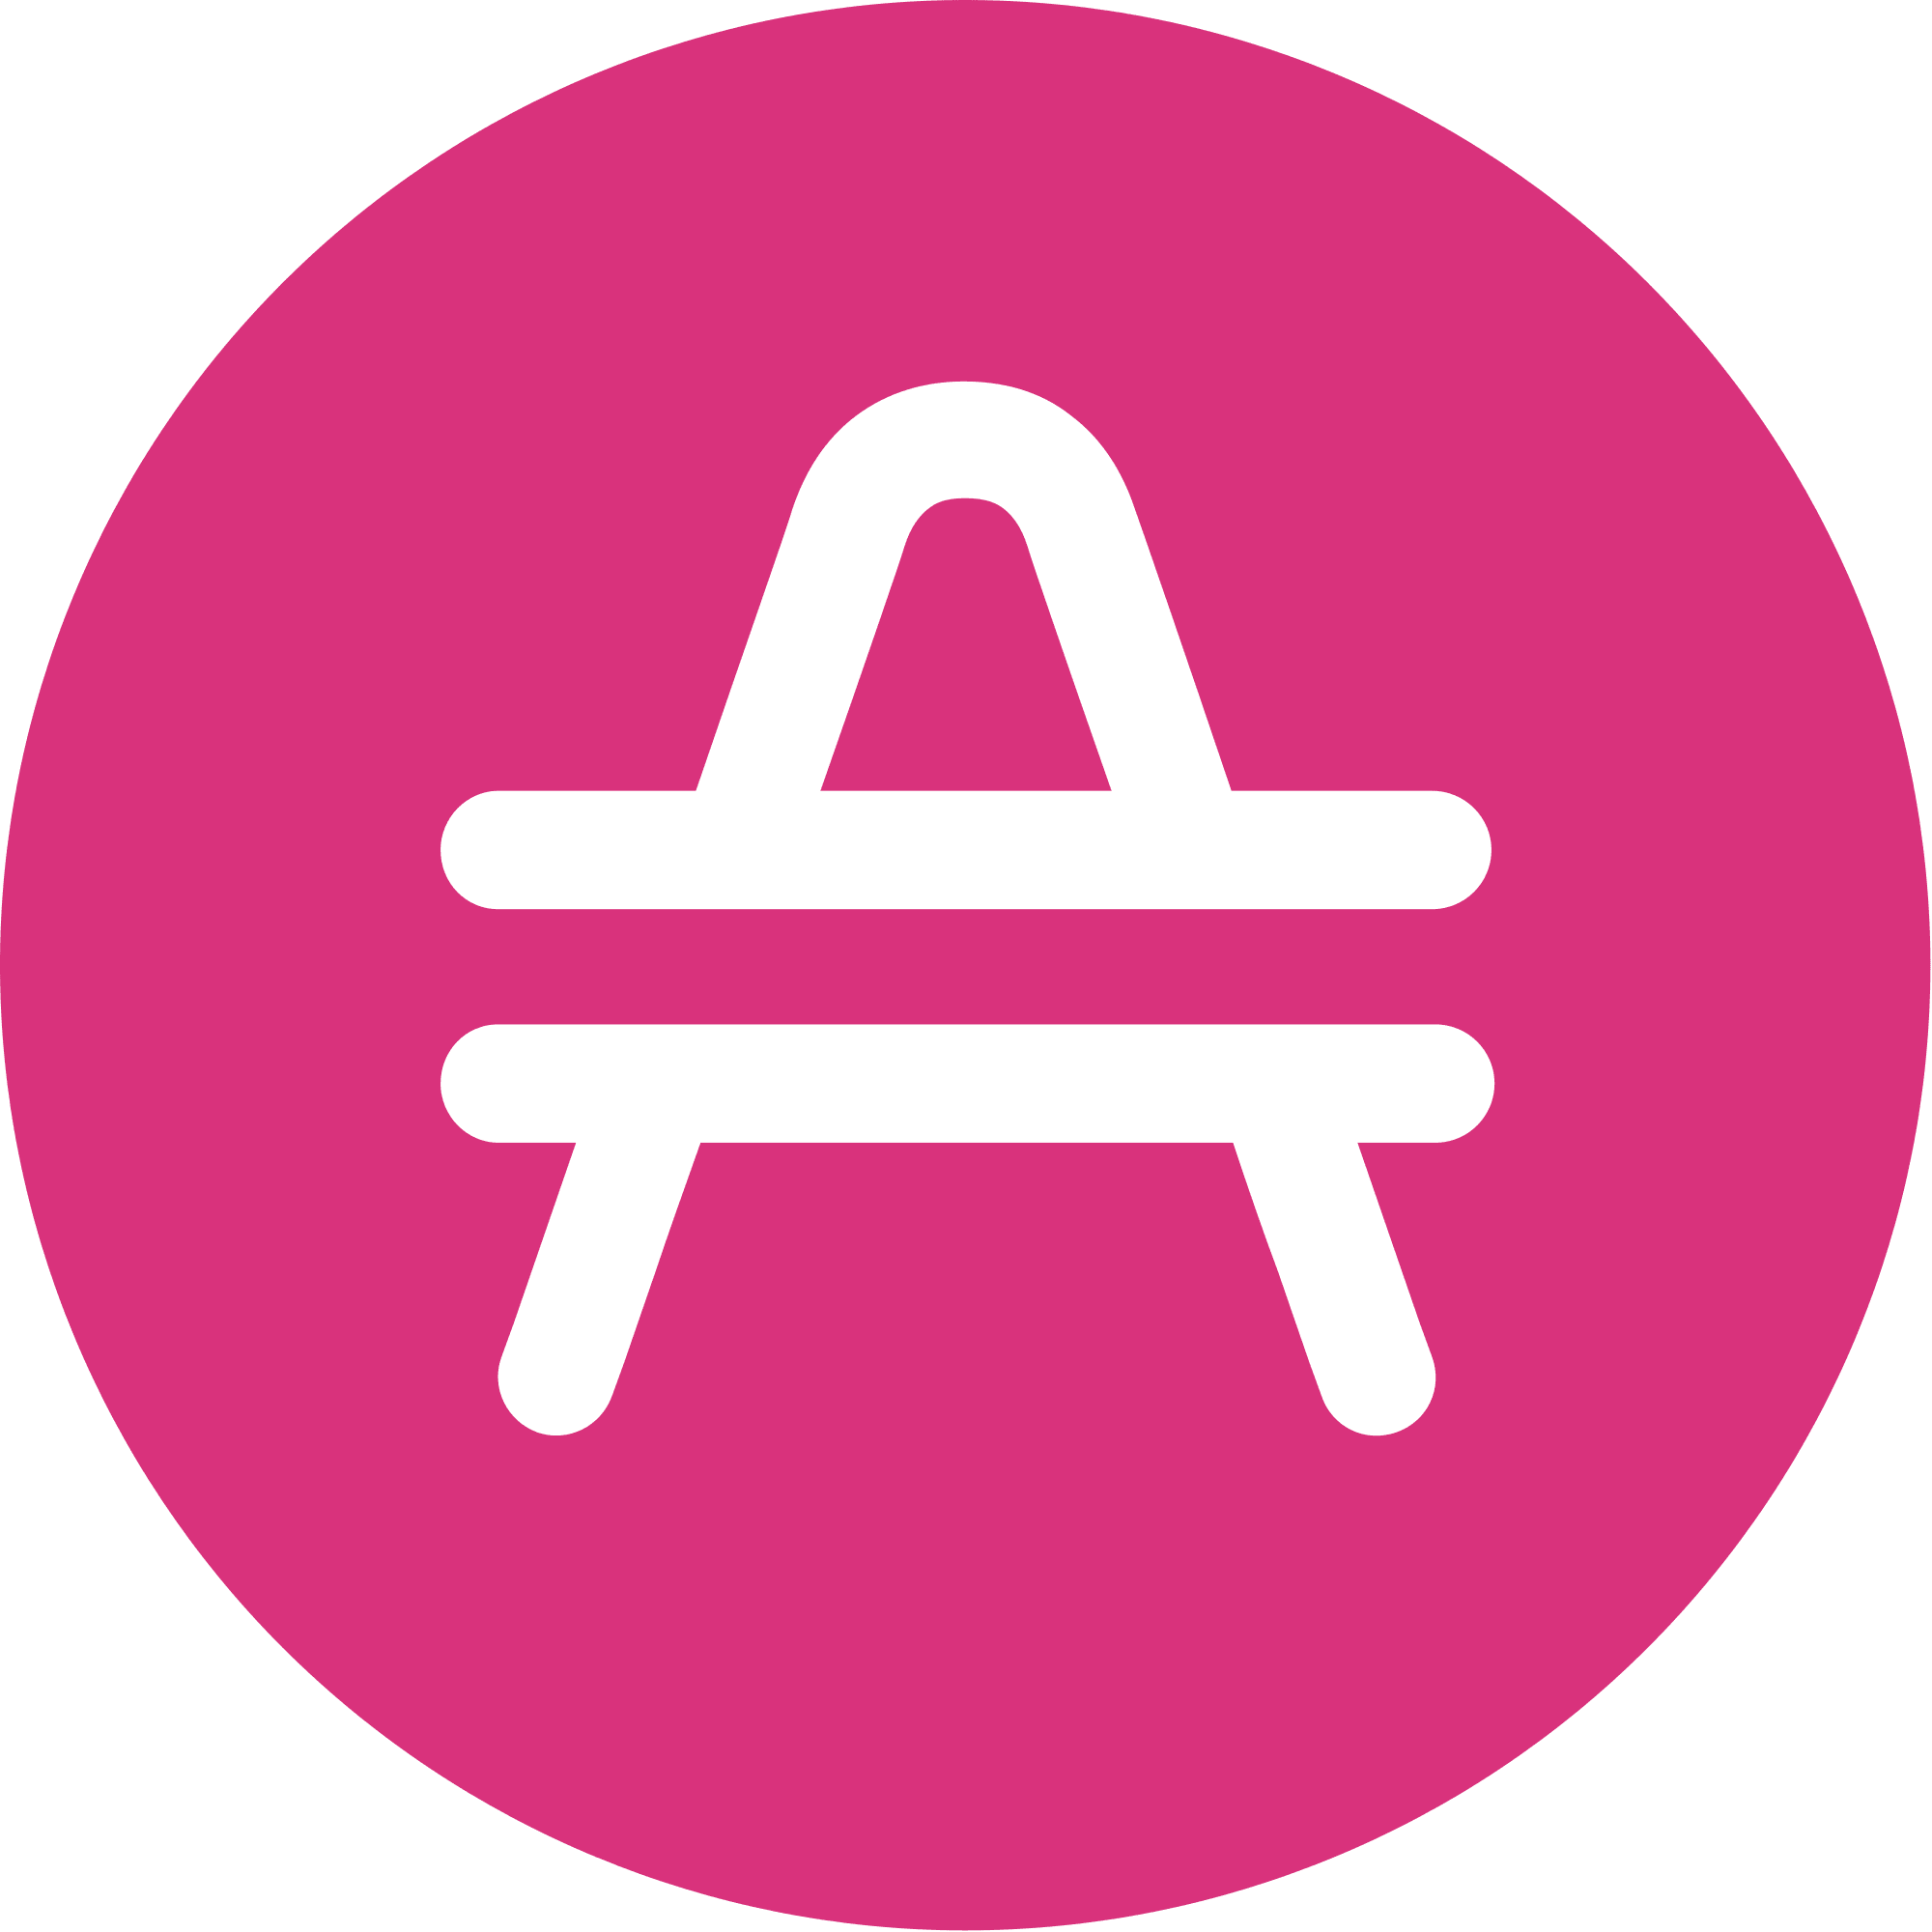 Amp logo in png format